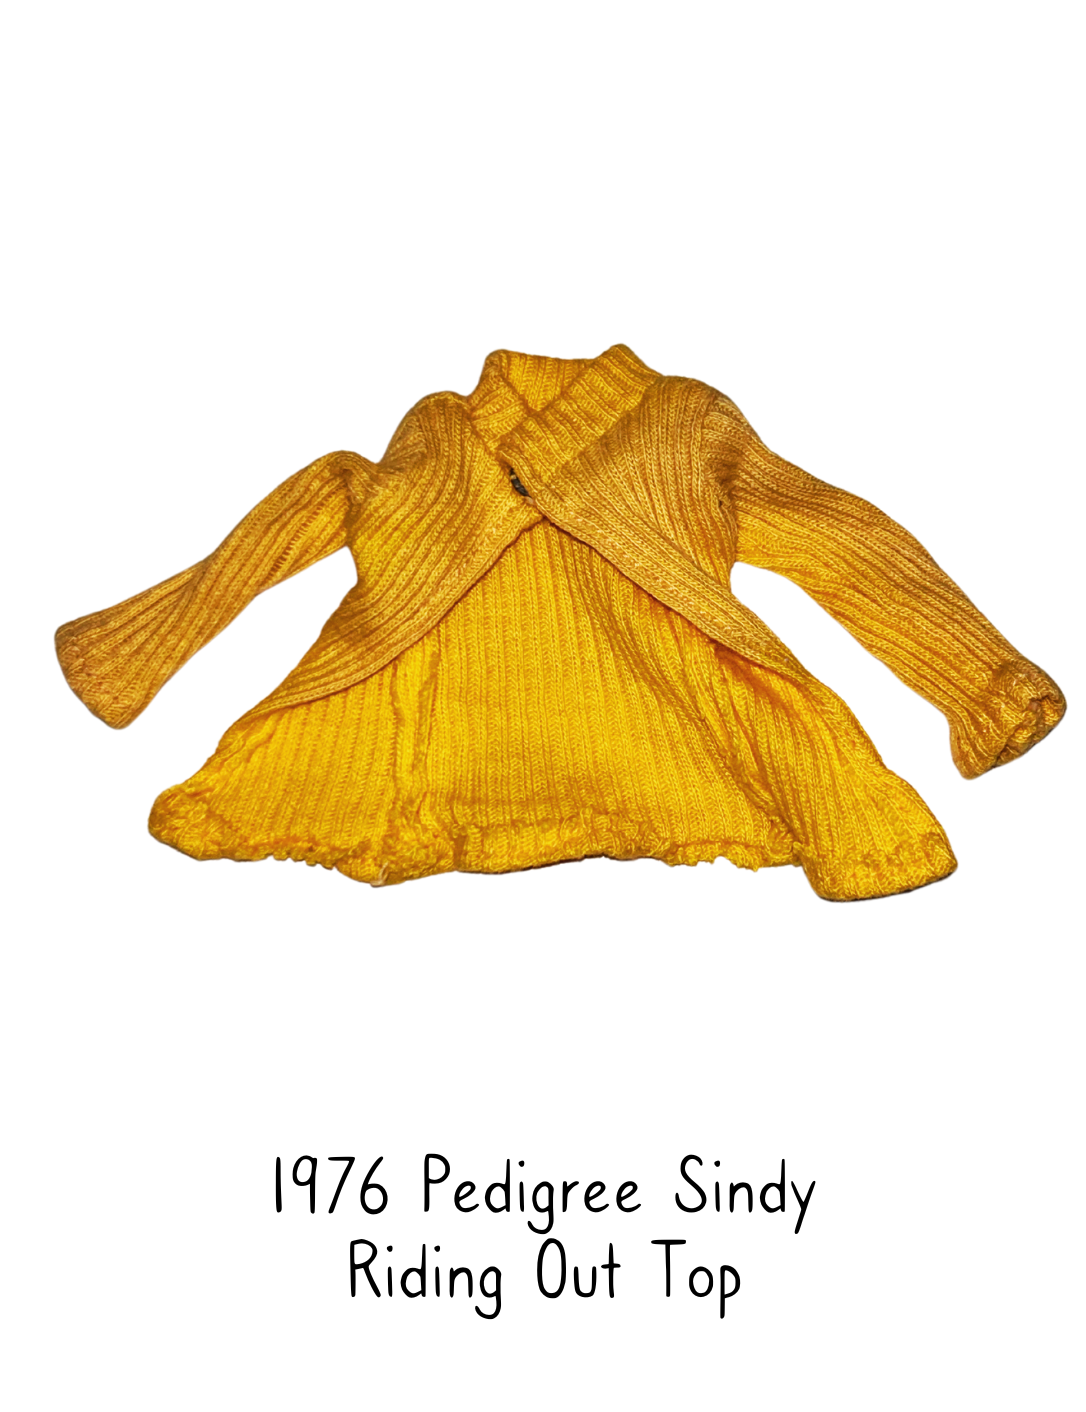 1976 Pedigree Sindy Fashion Doll Riding Out Yellow Top